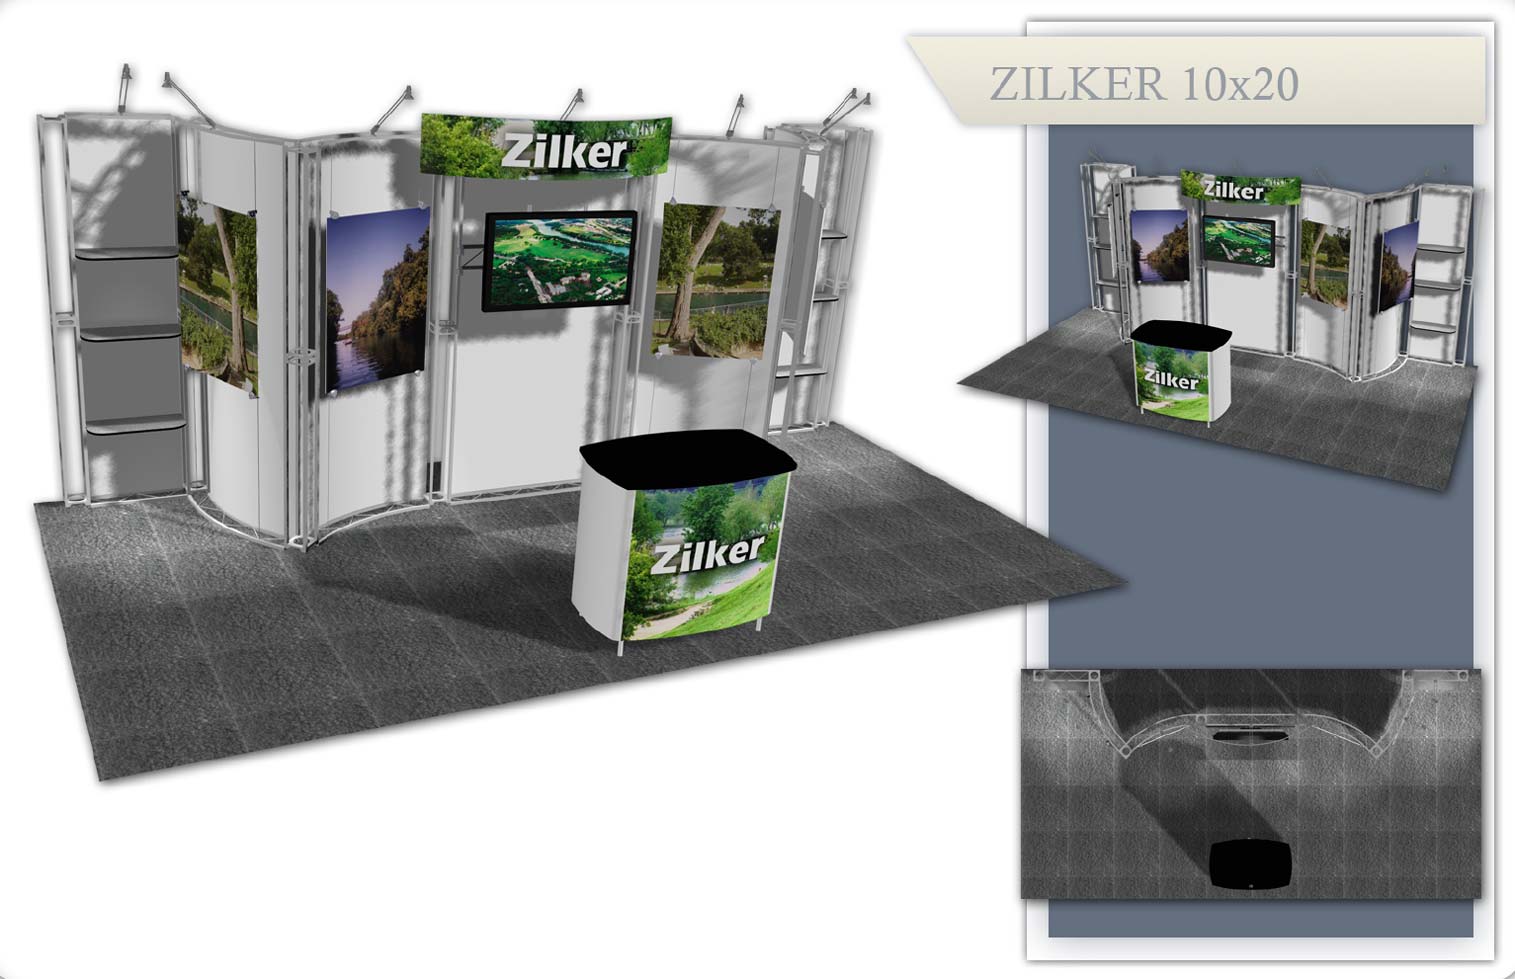 Austin Used Trade Show Display - Zilker 10x20